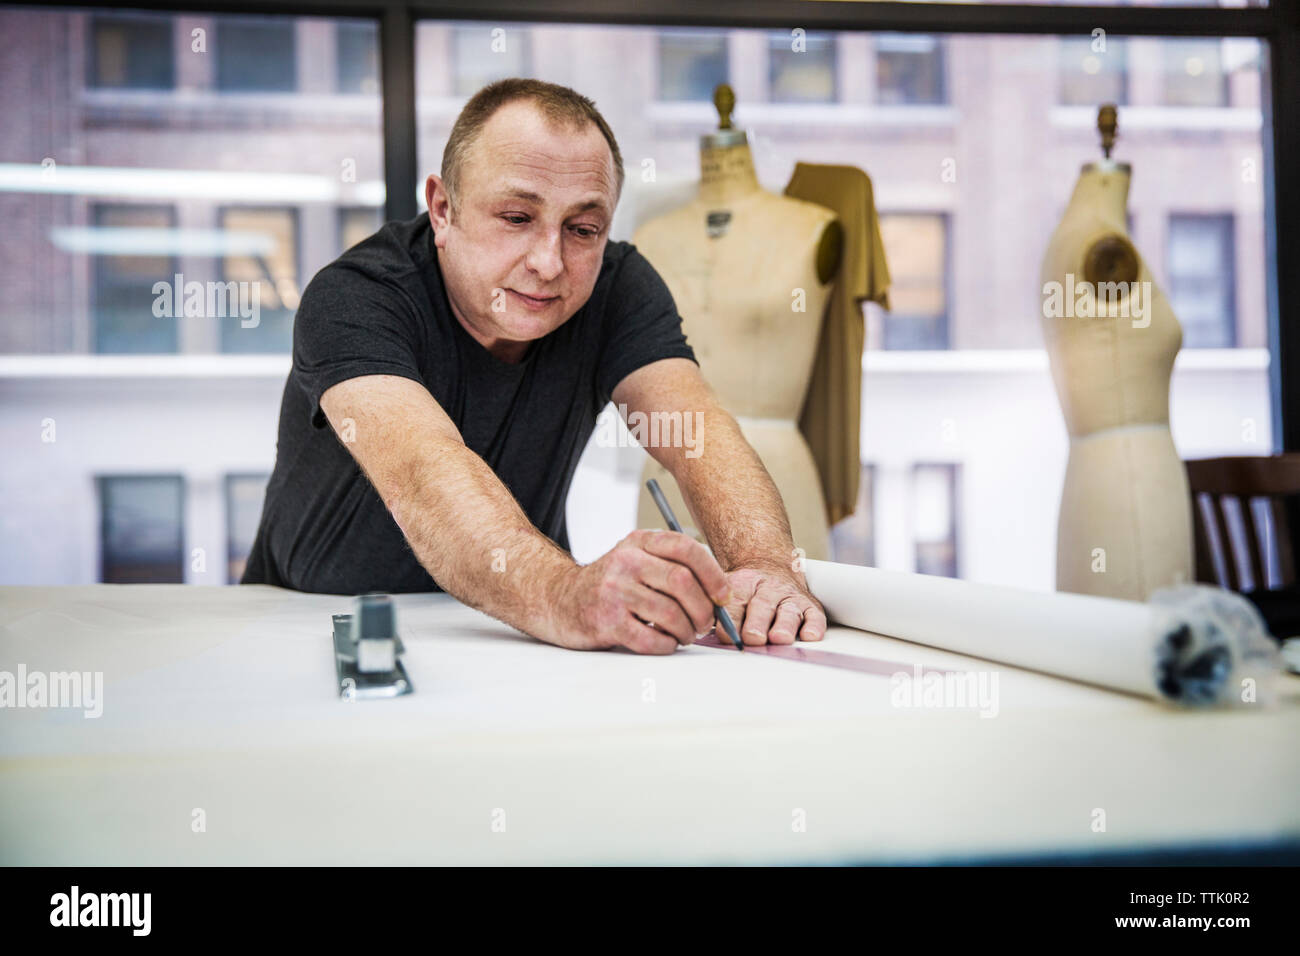 Fashion designer working at table in design studio Banque D'Images